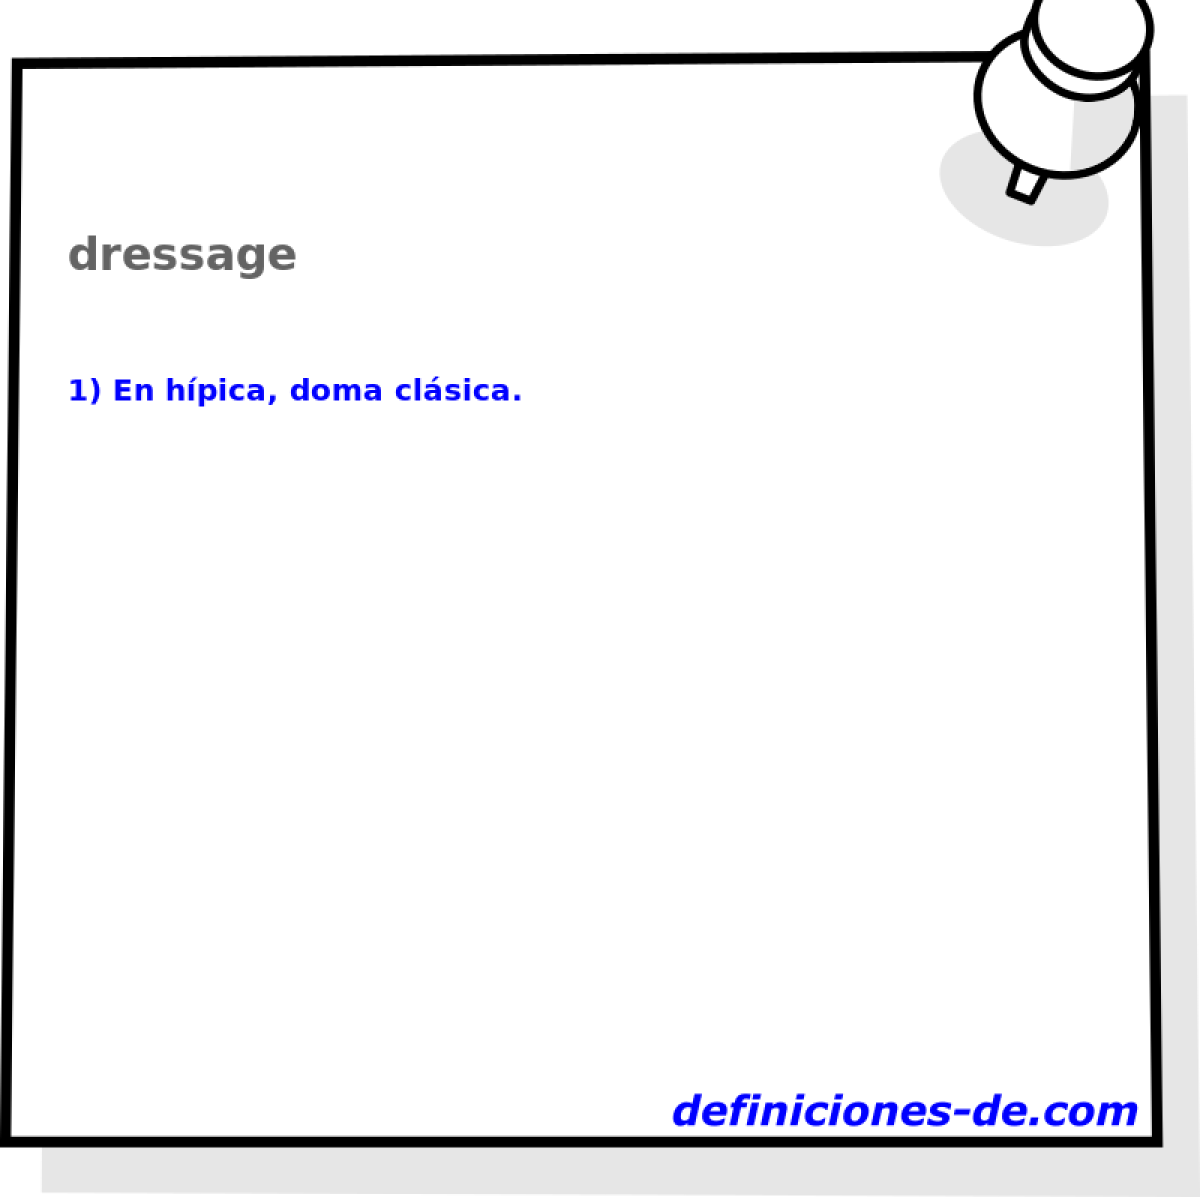 dressage 